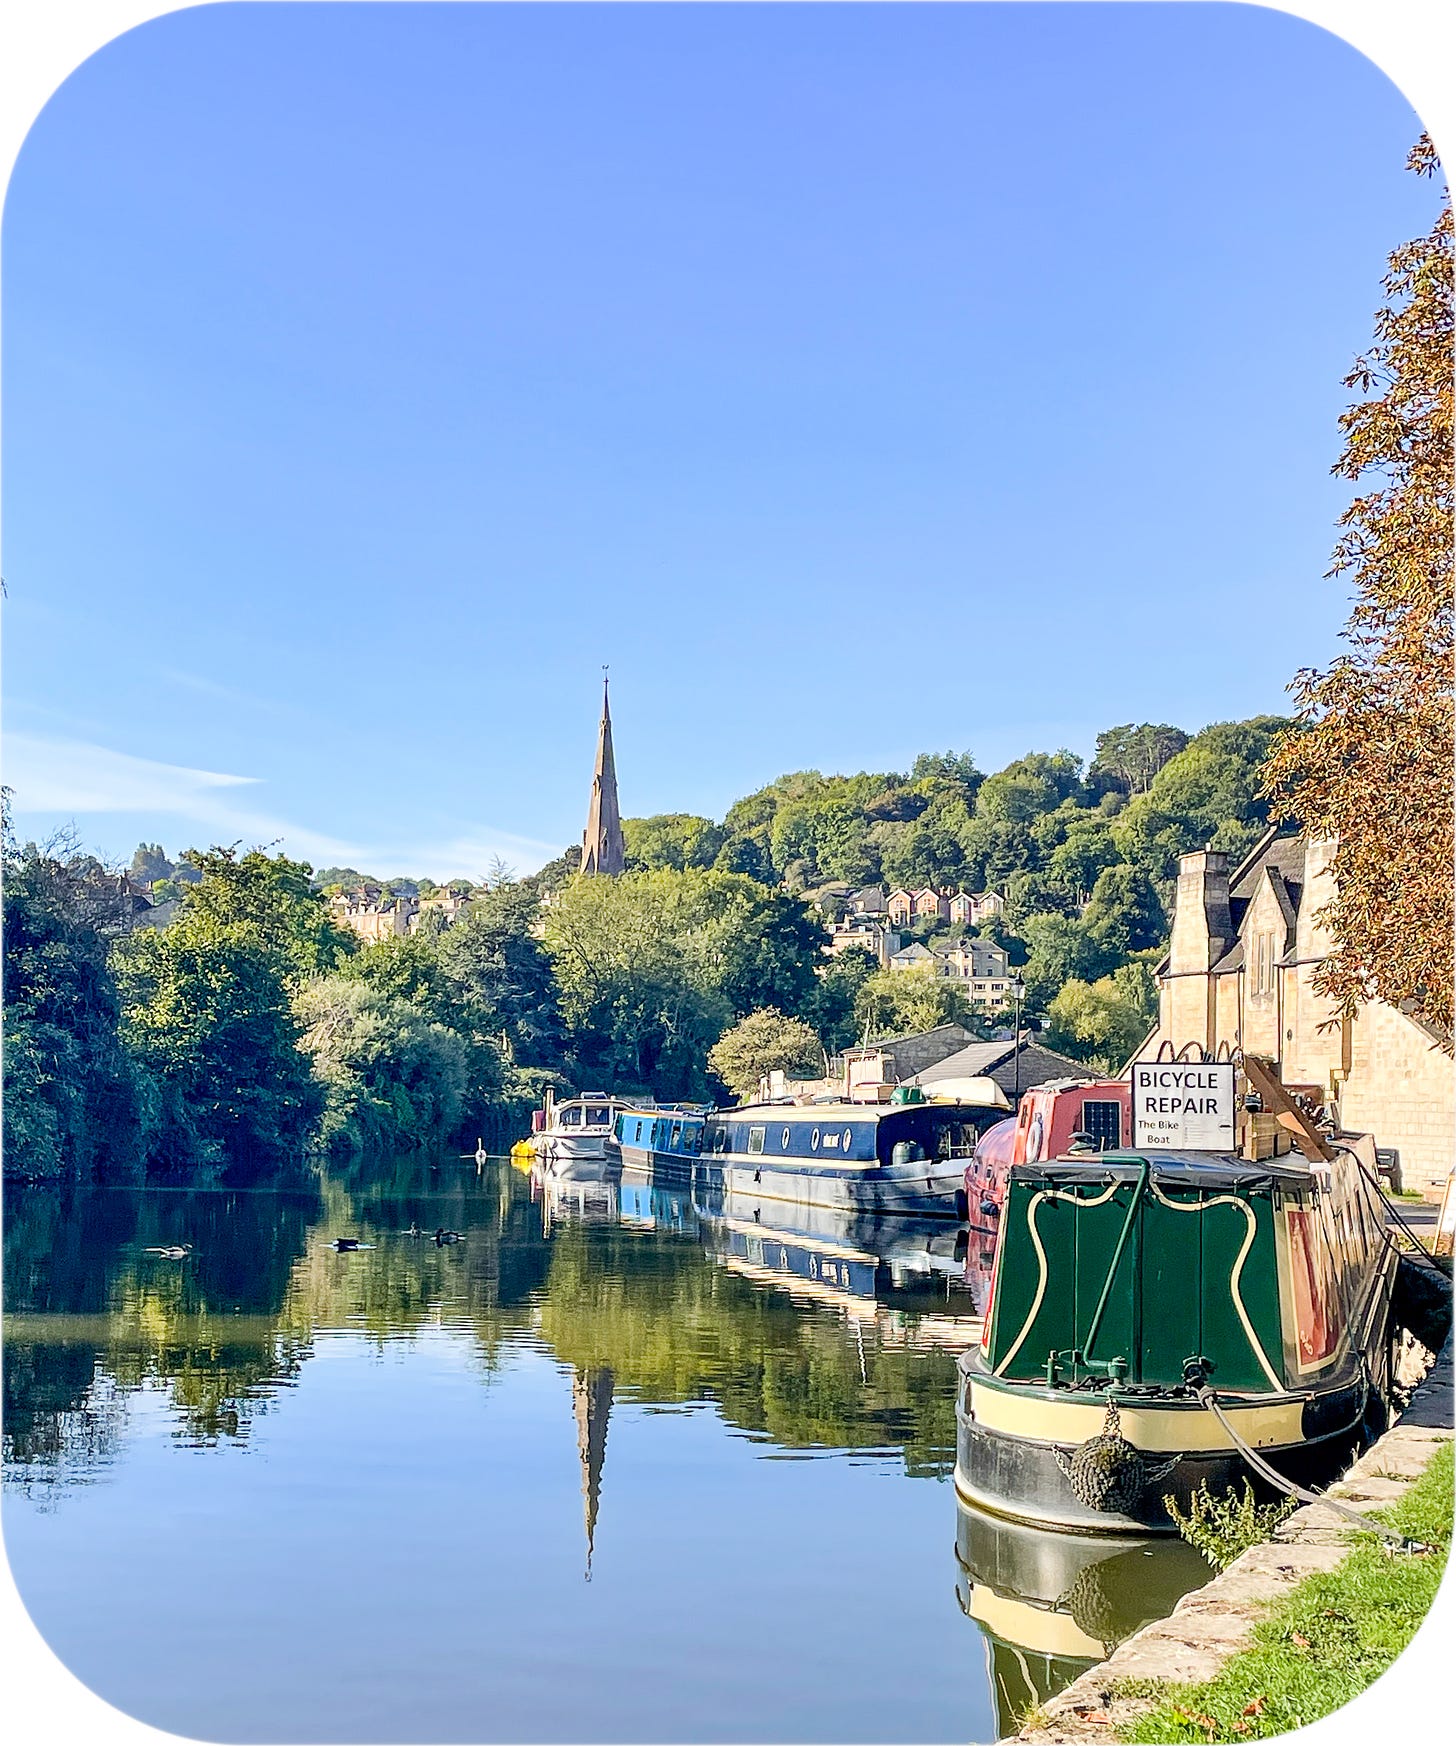 Houseboats on the River Avon, Bath, England